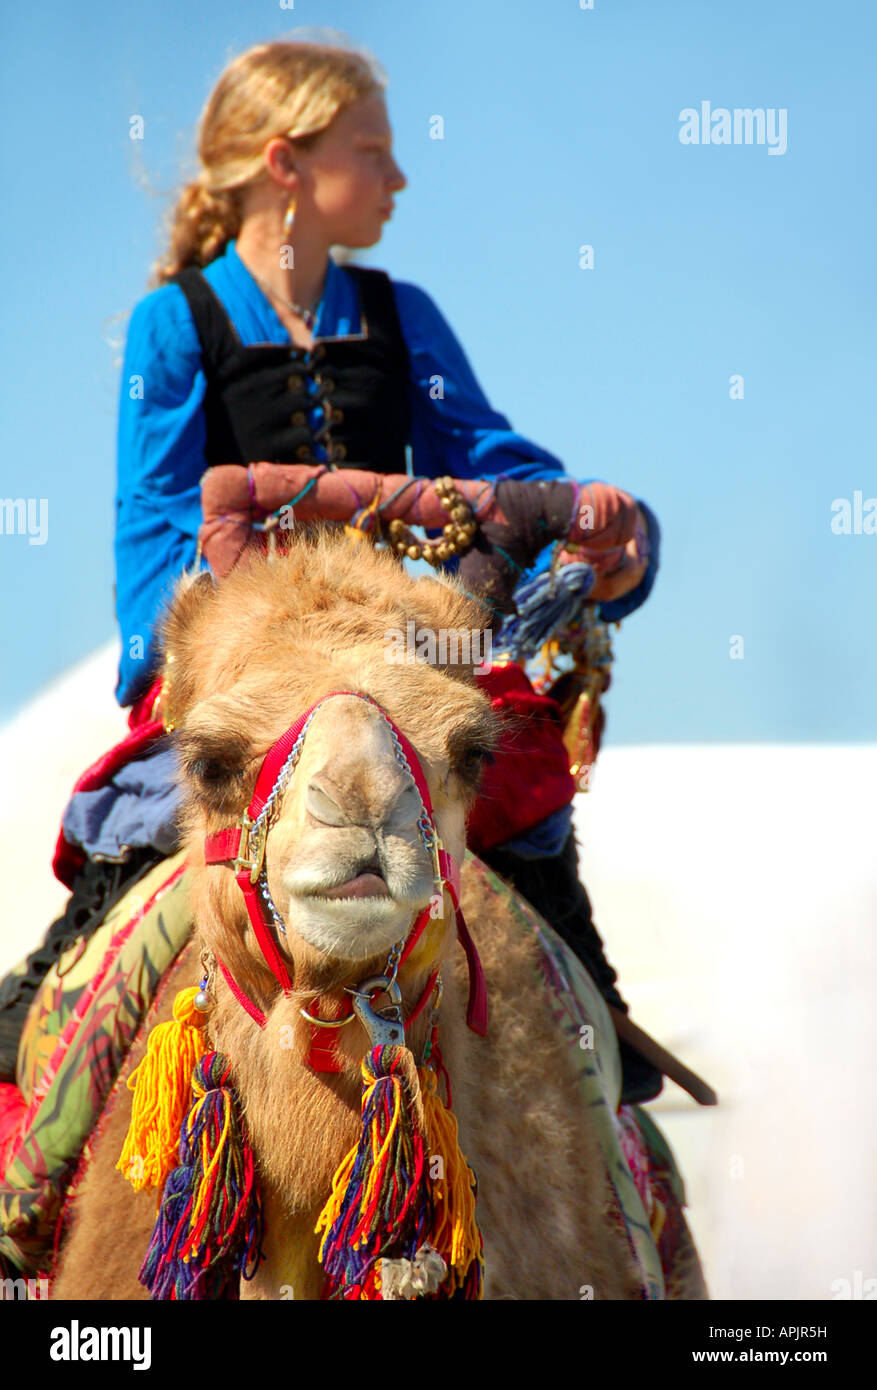 Femme en costume traditionnel Riding Camel Photo Stock - Alamy